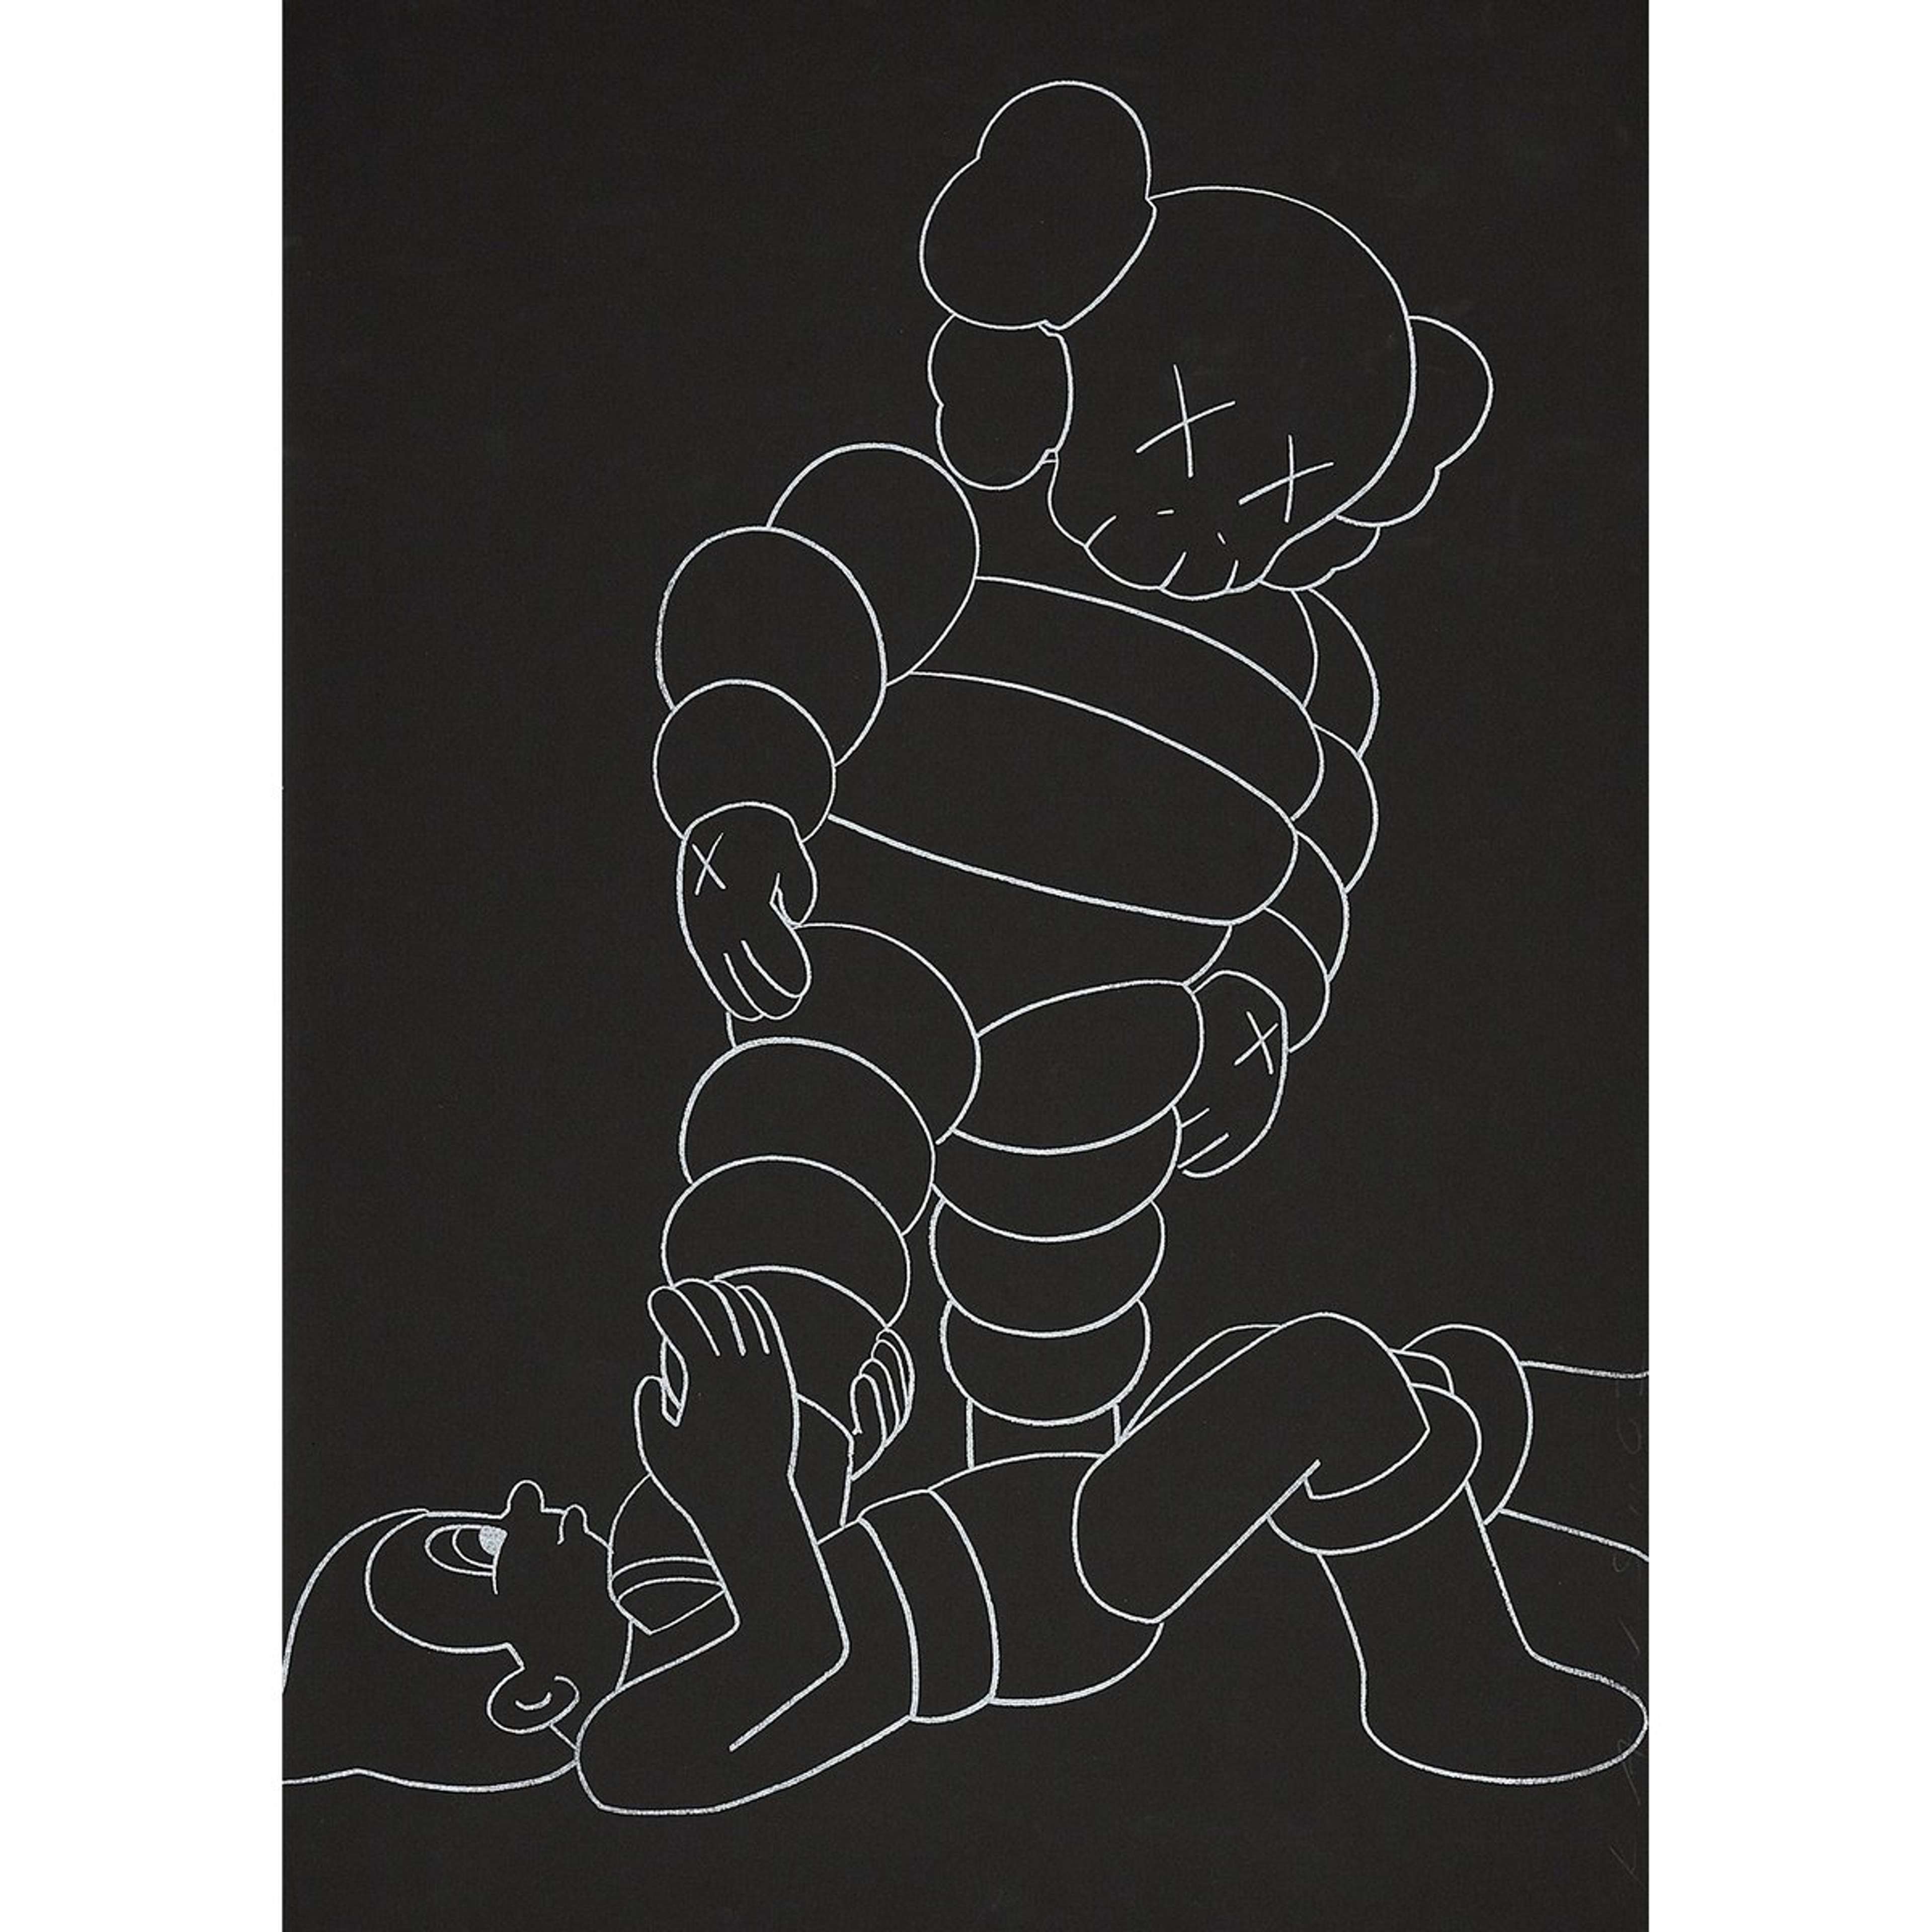 Chum Vs Astroboy - Signed Print